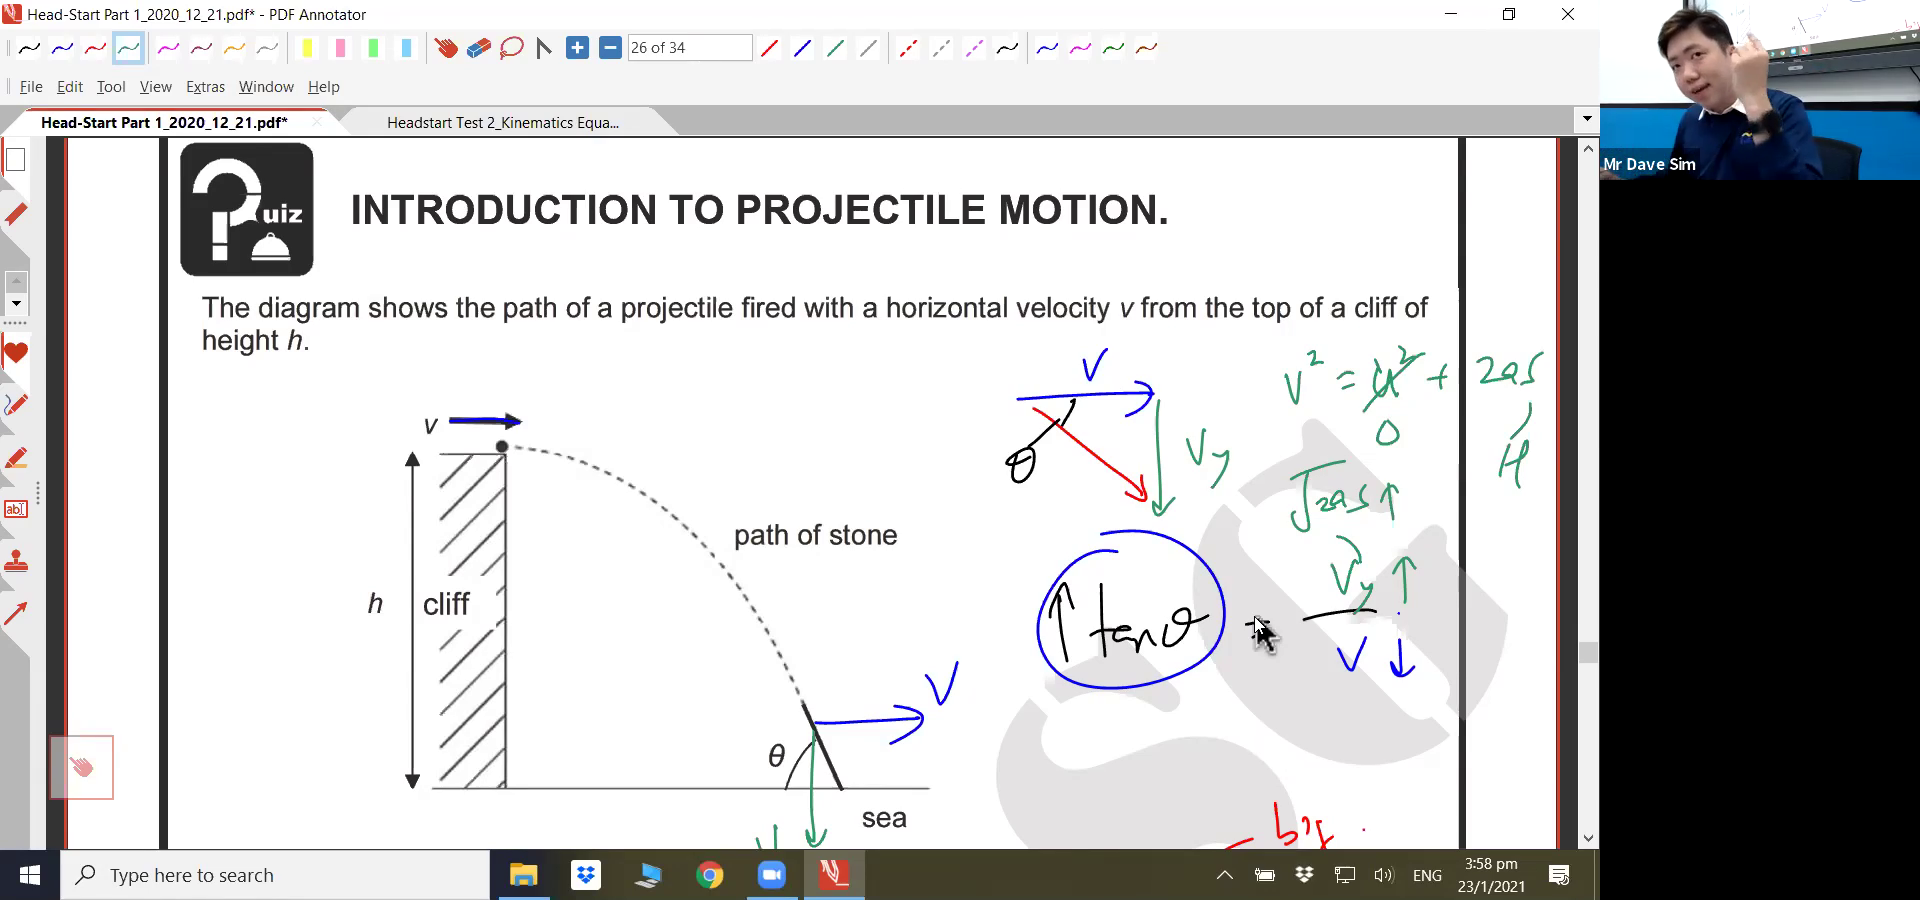 [JC HEADSTART] Projectile Motion, Forces, Dynamics